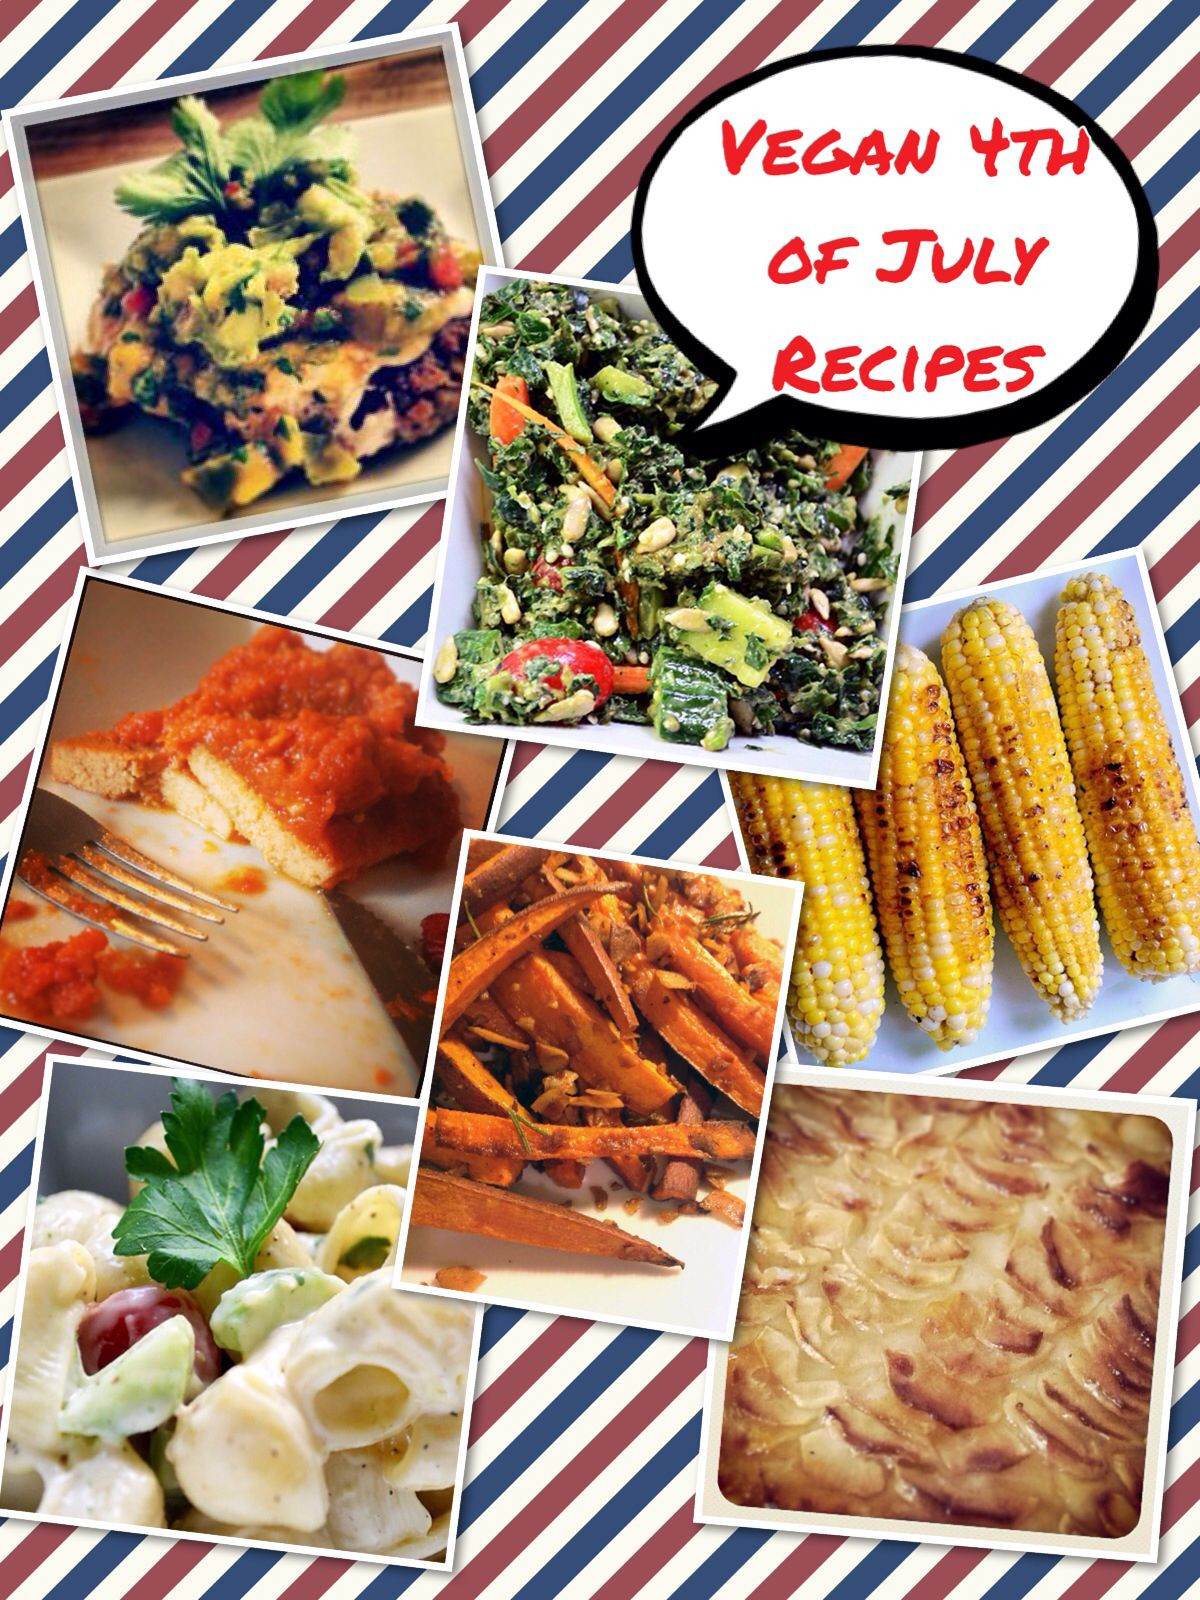 Vegetarian 4Th Of July Recipes
 7 Vegan 4th of July Recipes